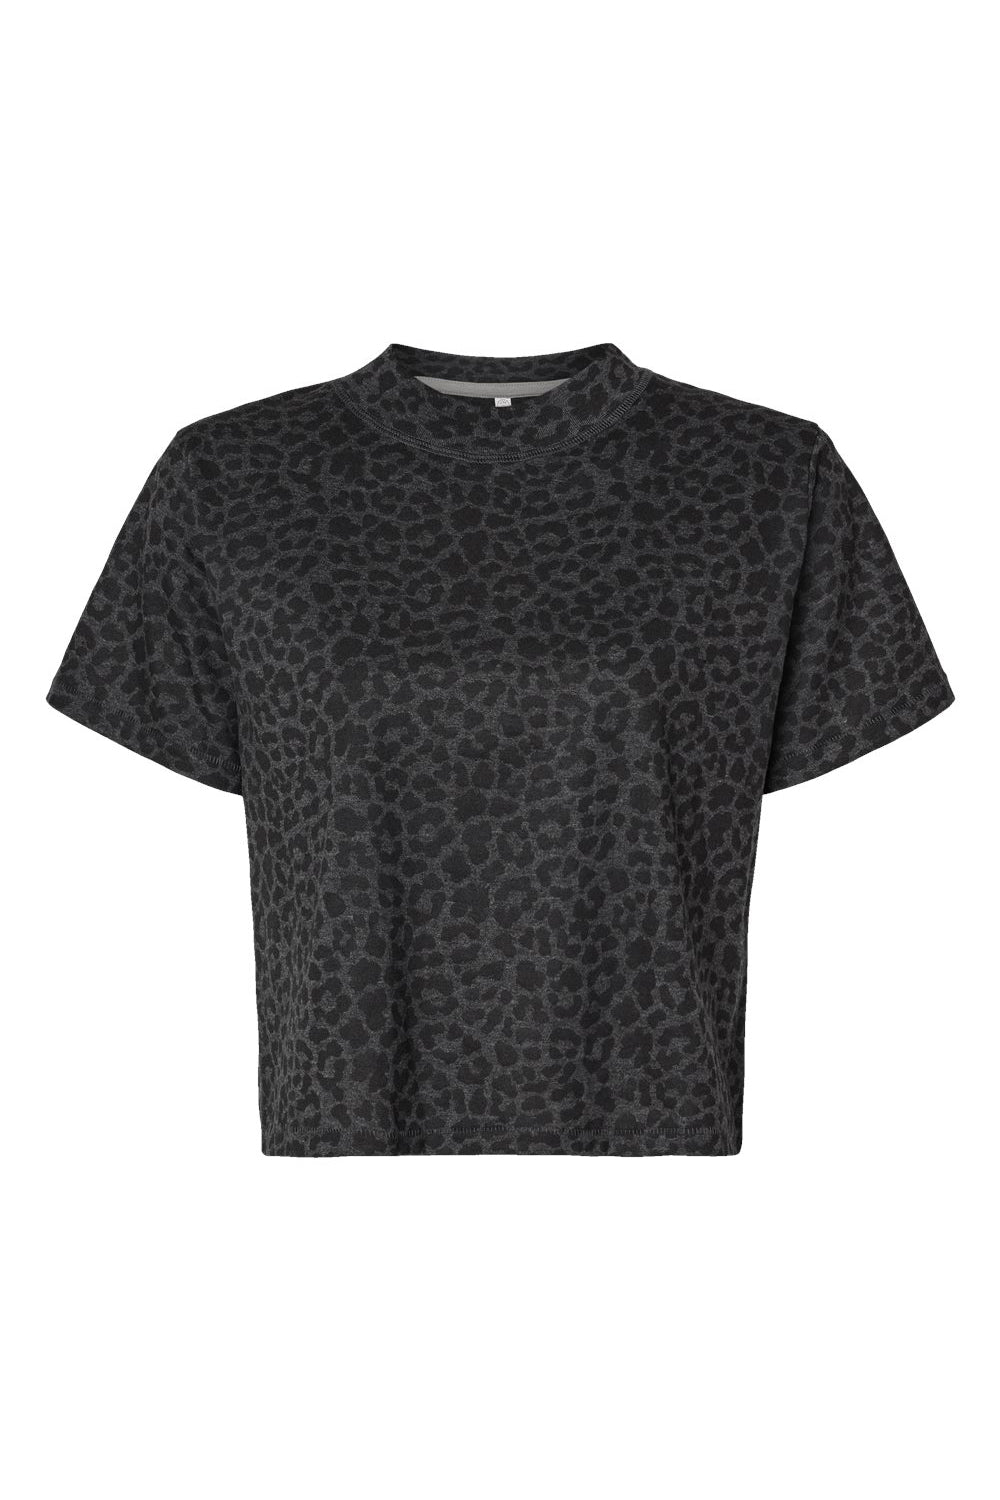 LAT 3518 Womens Boxy Short Sleeve Crewneck T-Shirt Black Leopard Flat Front